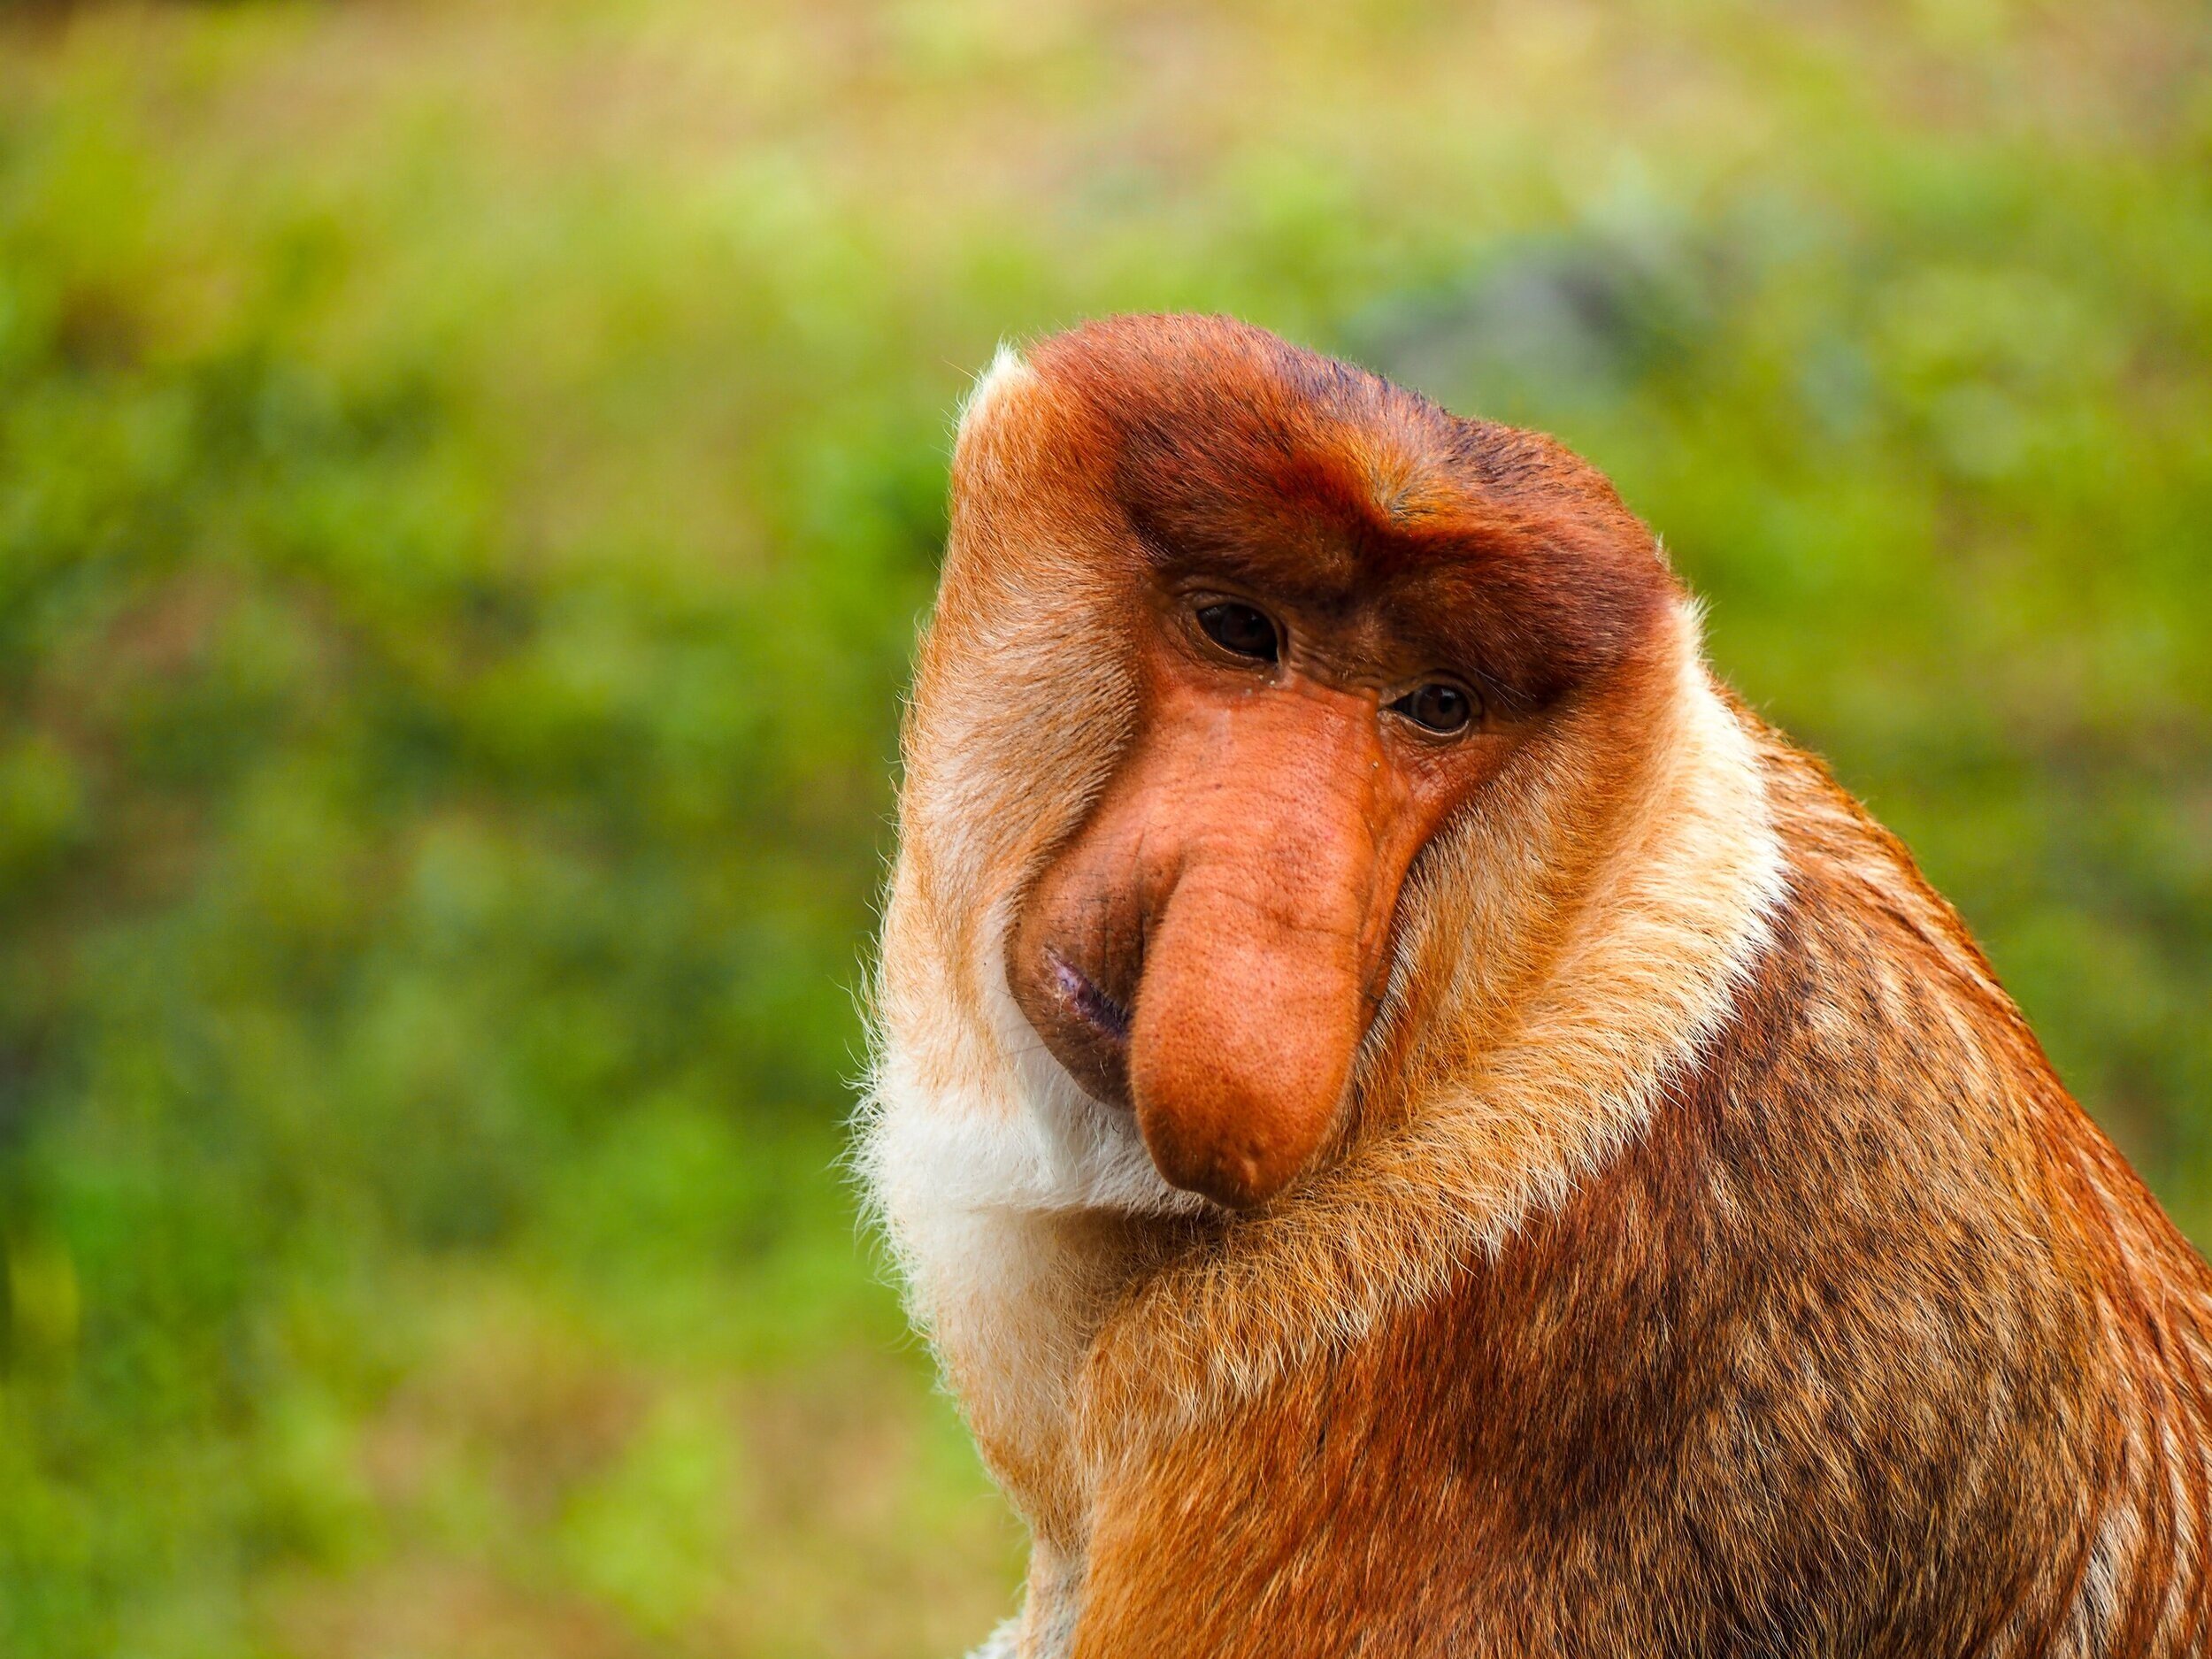 Proboscis Monkey - photo by Charge The Globe on Unsplash (Copy)